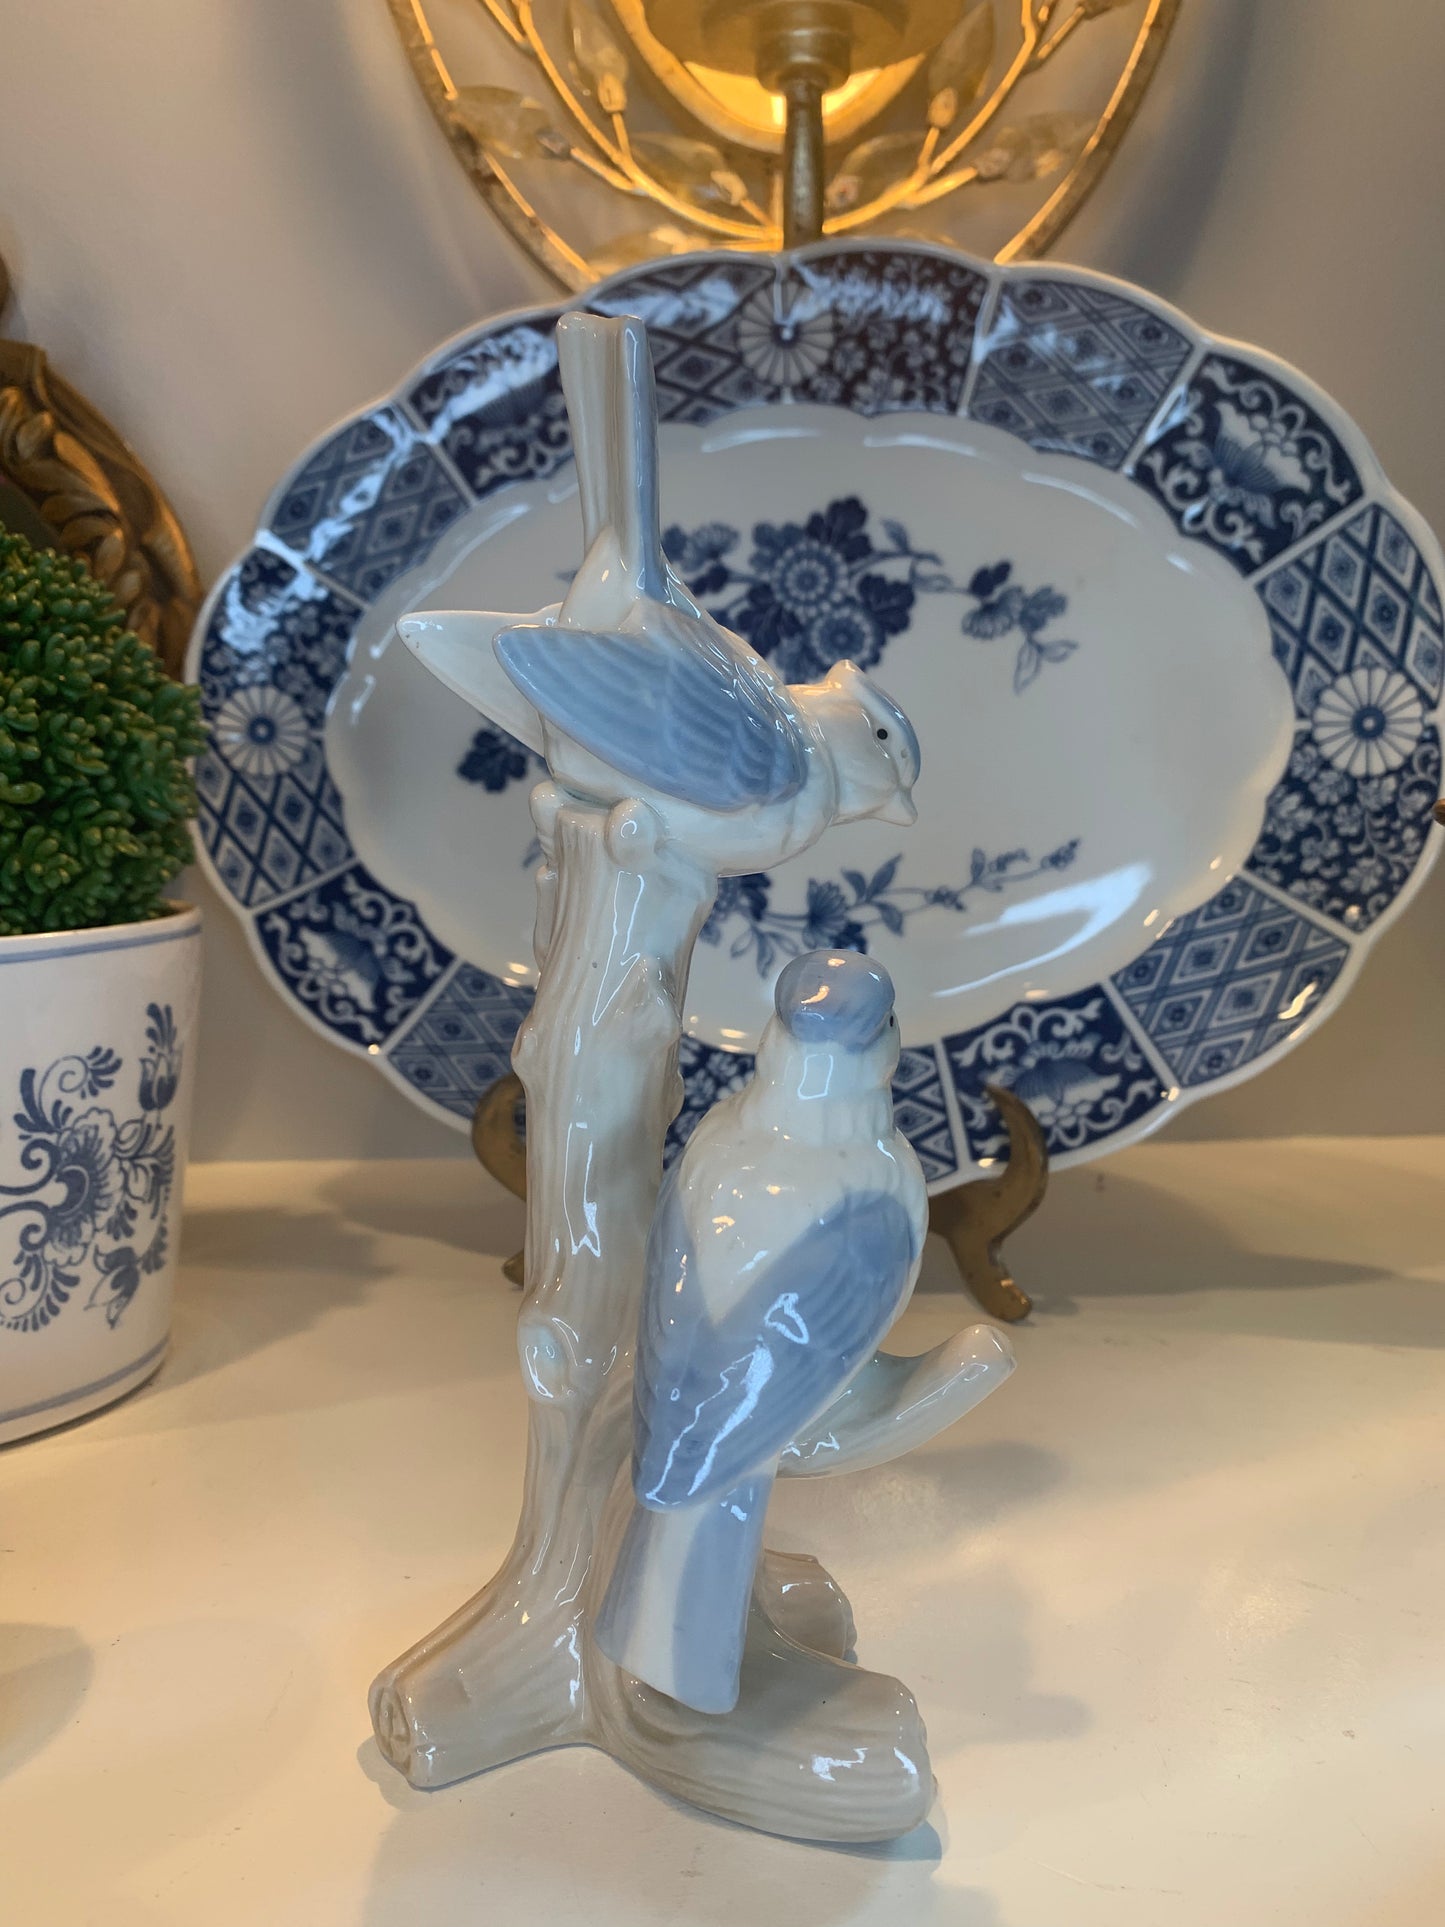 Vintage Blue and White Ceramic birds